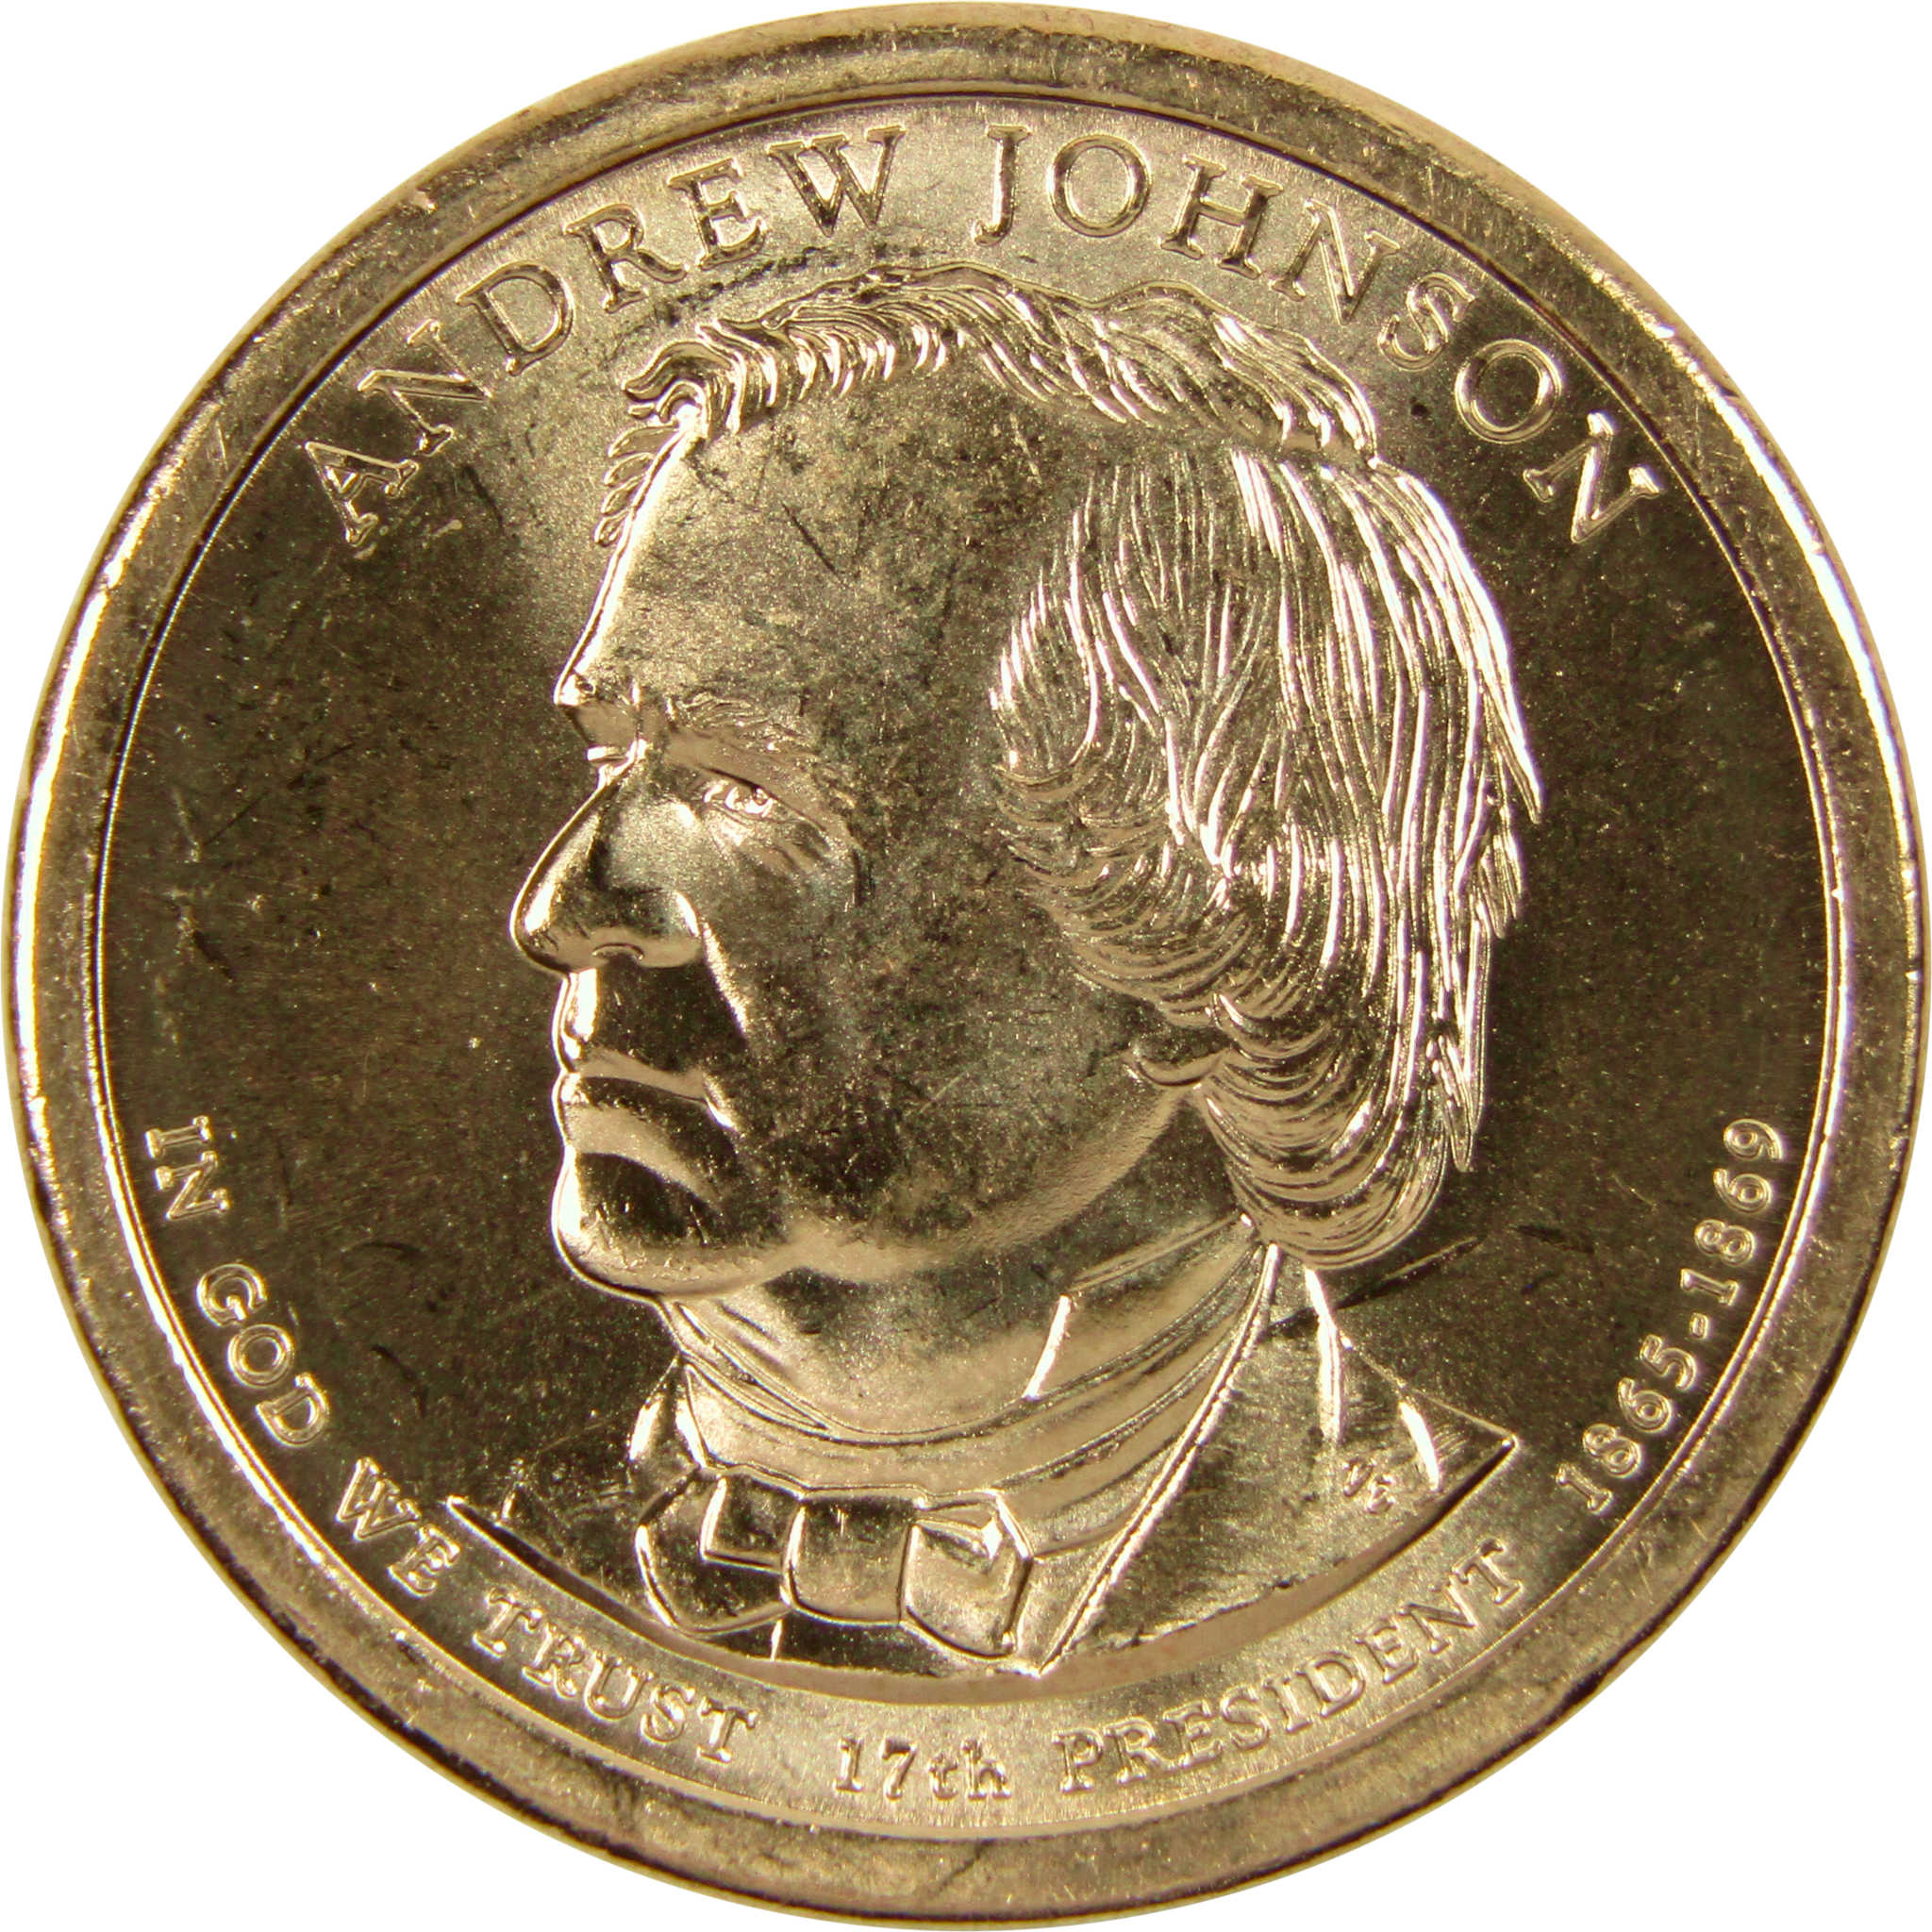 2011 P Andrew Johnson Presidential Dollar BU Uncirculated $1 Coin